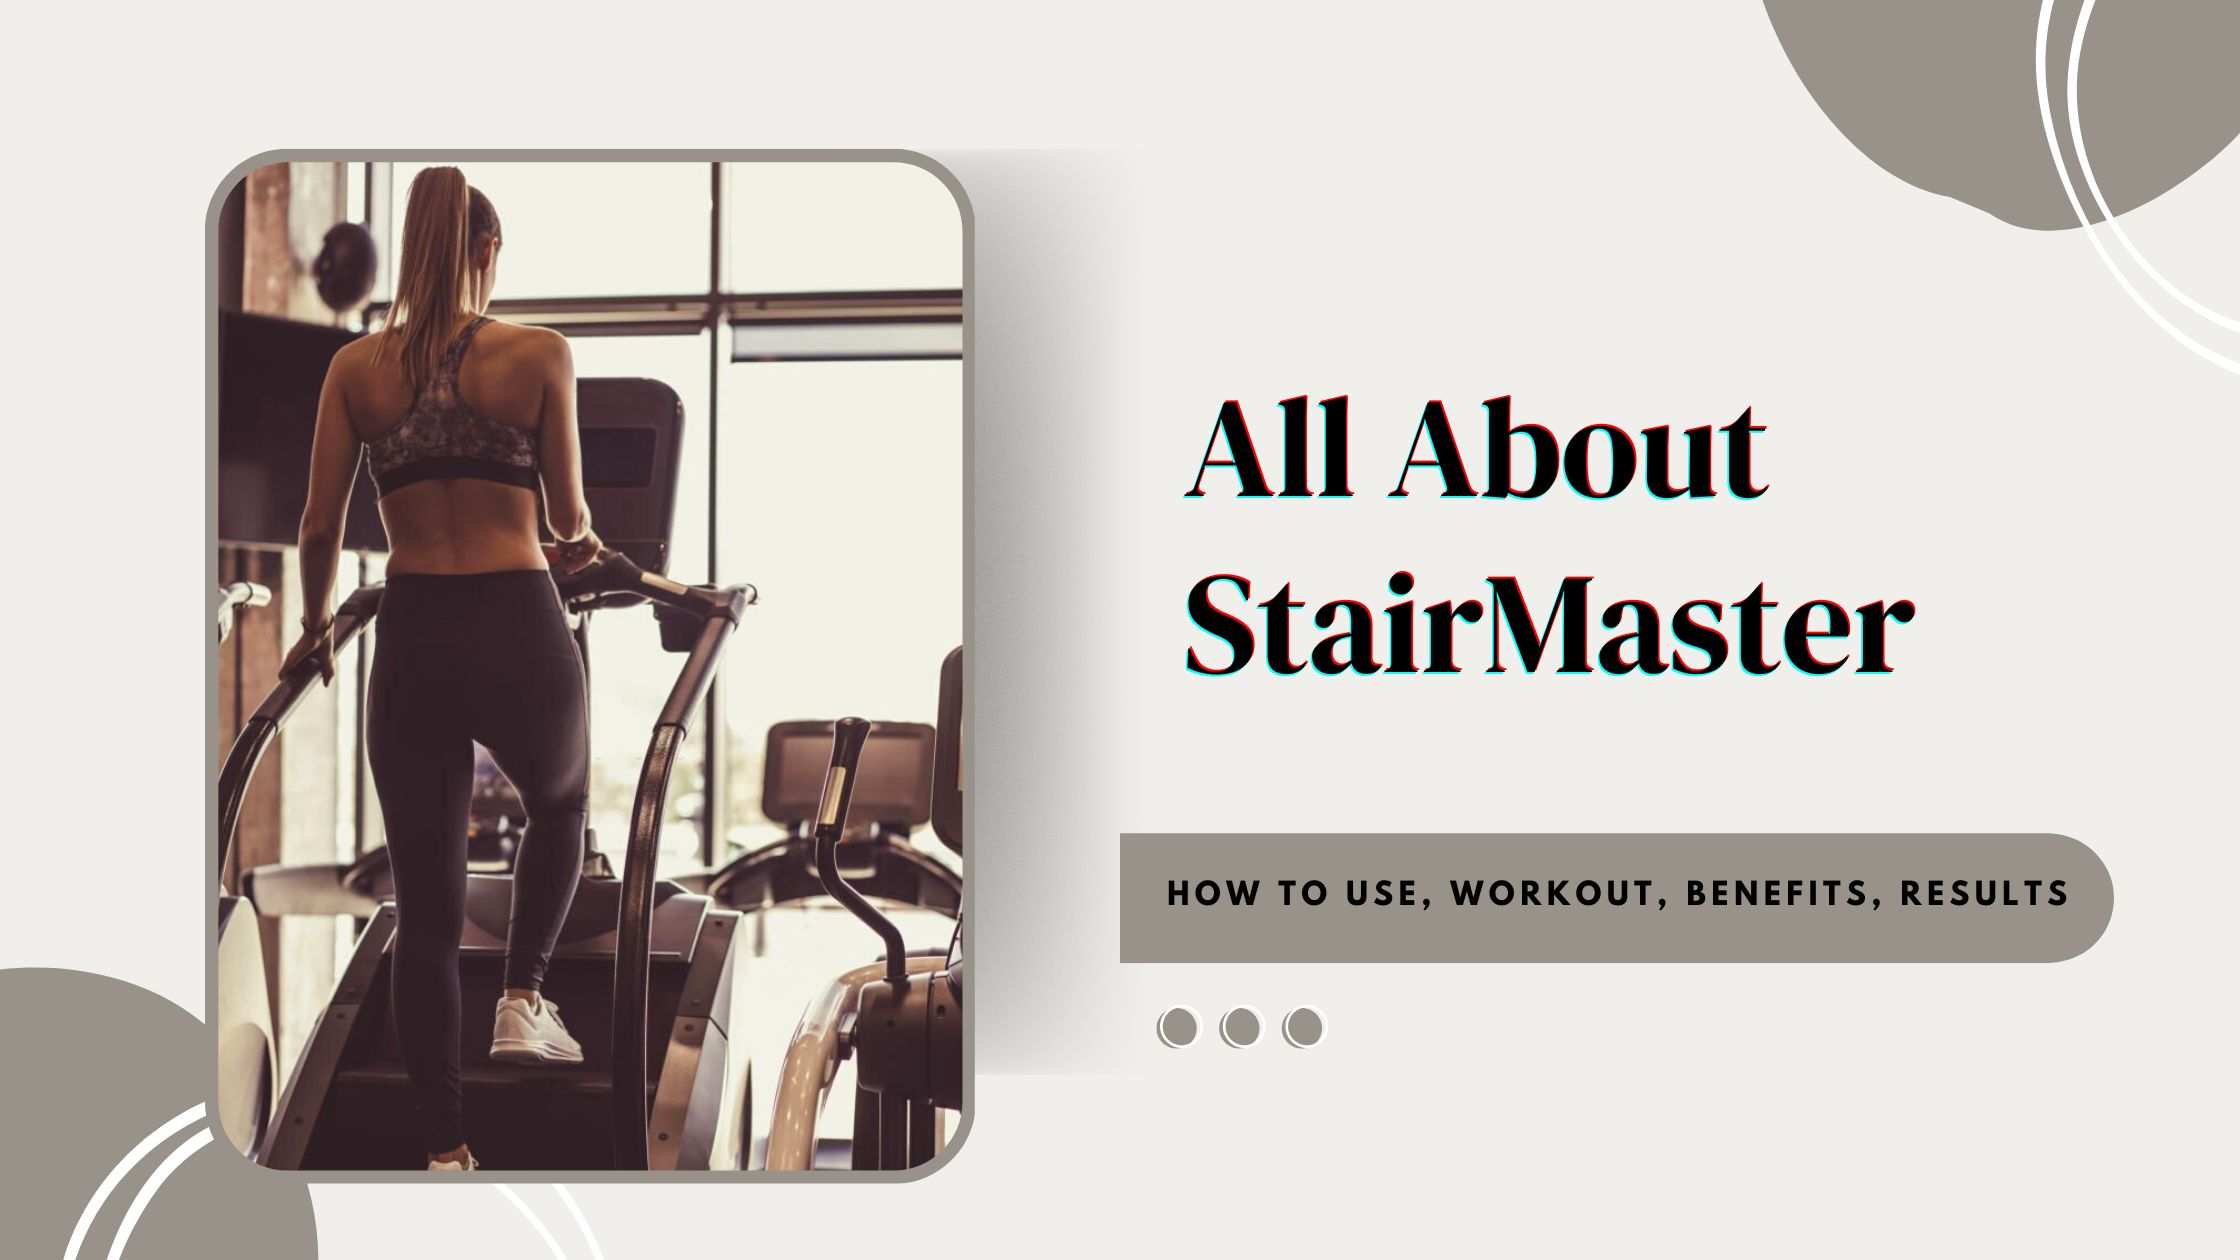 StairMaster